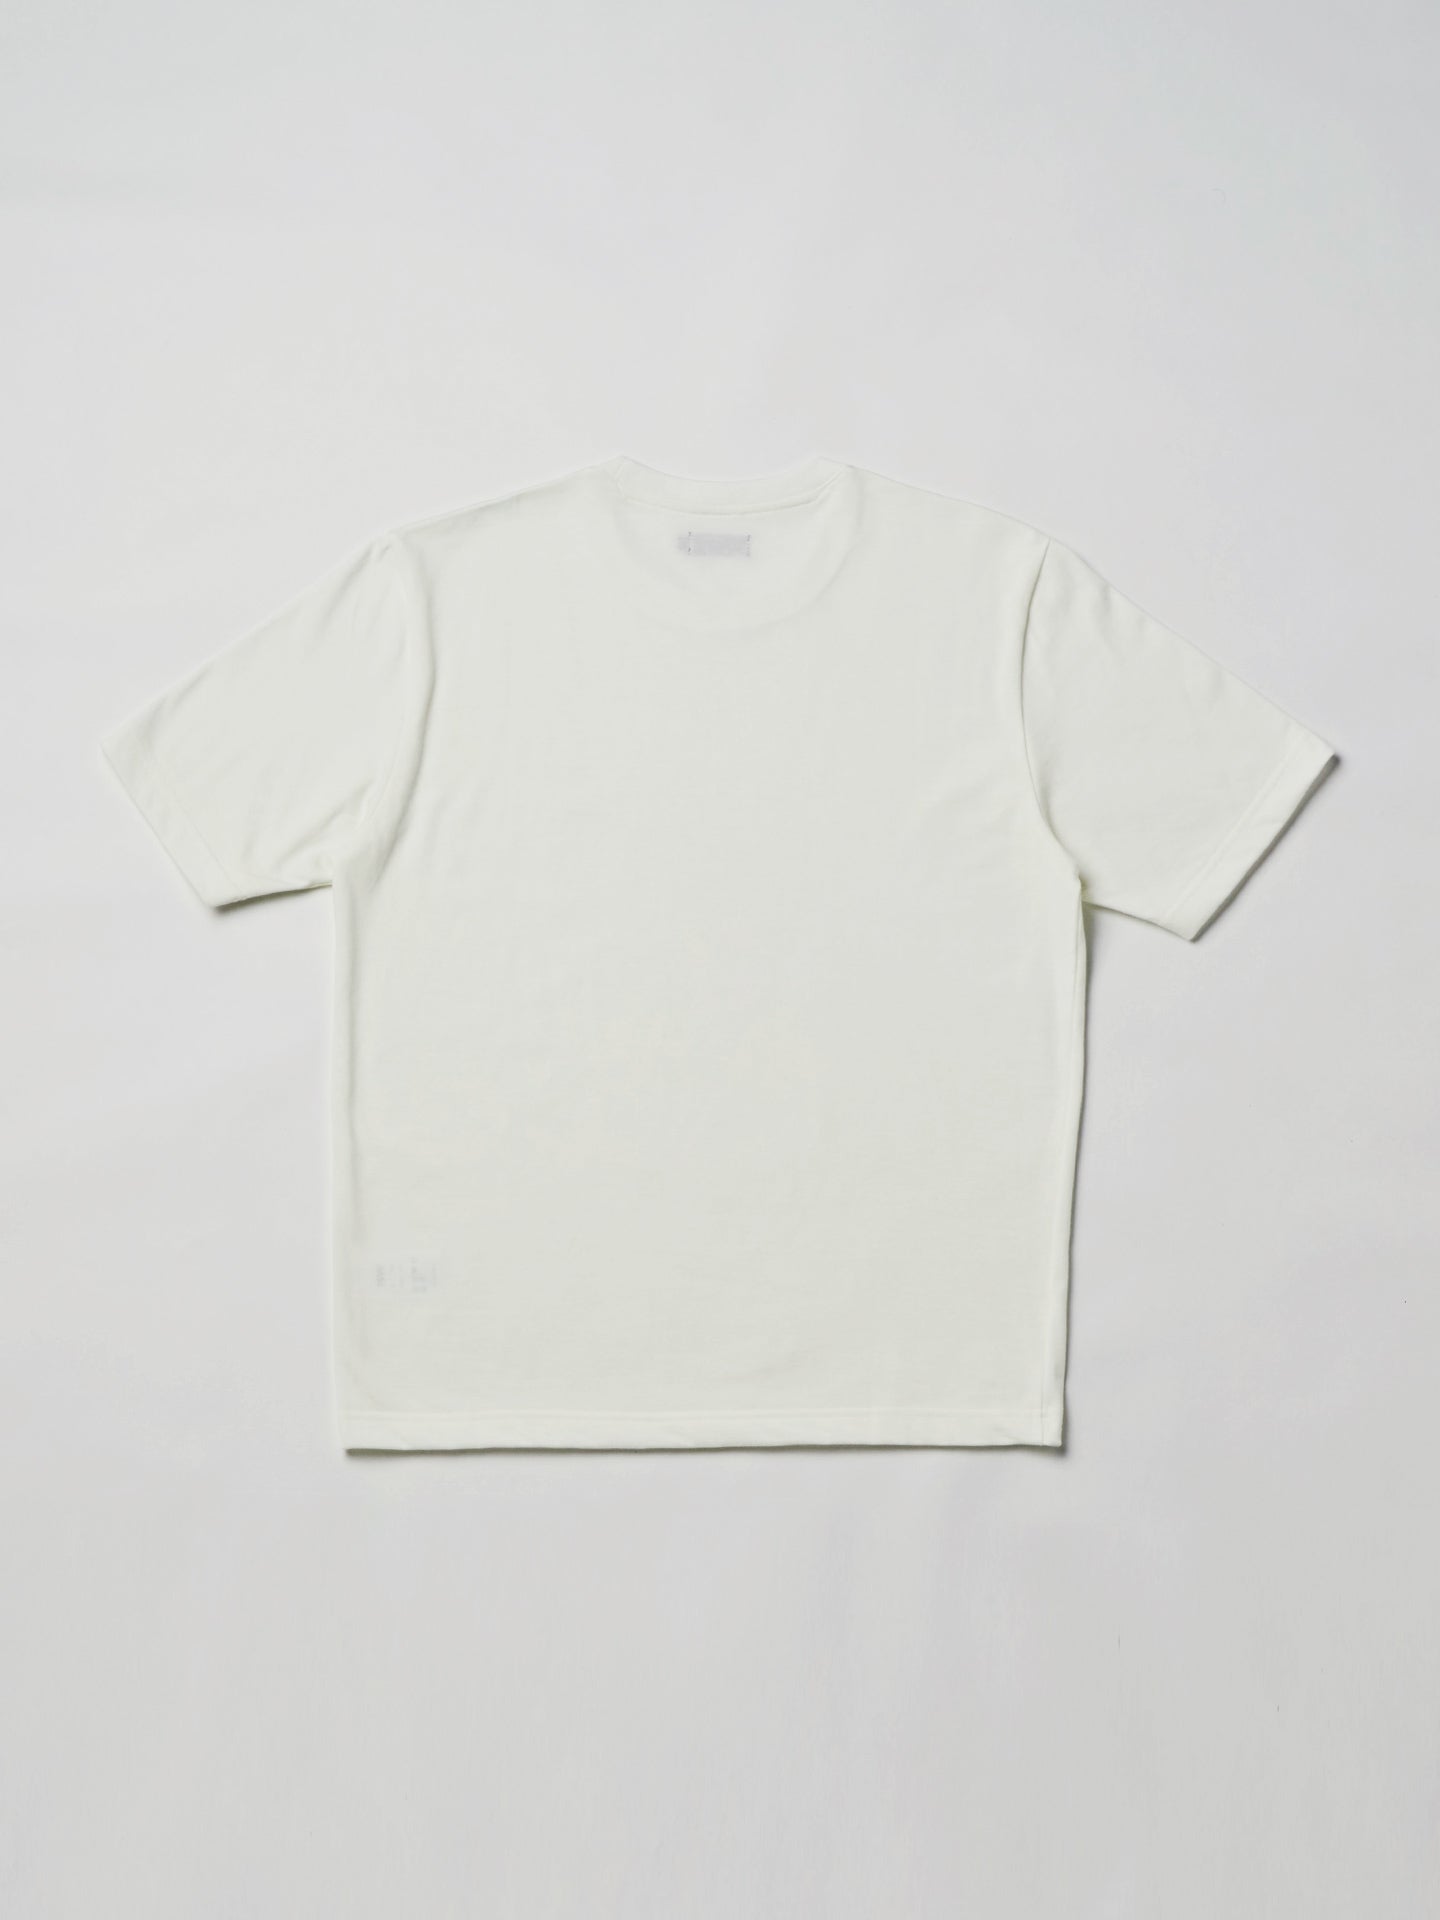 Free shirt / White